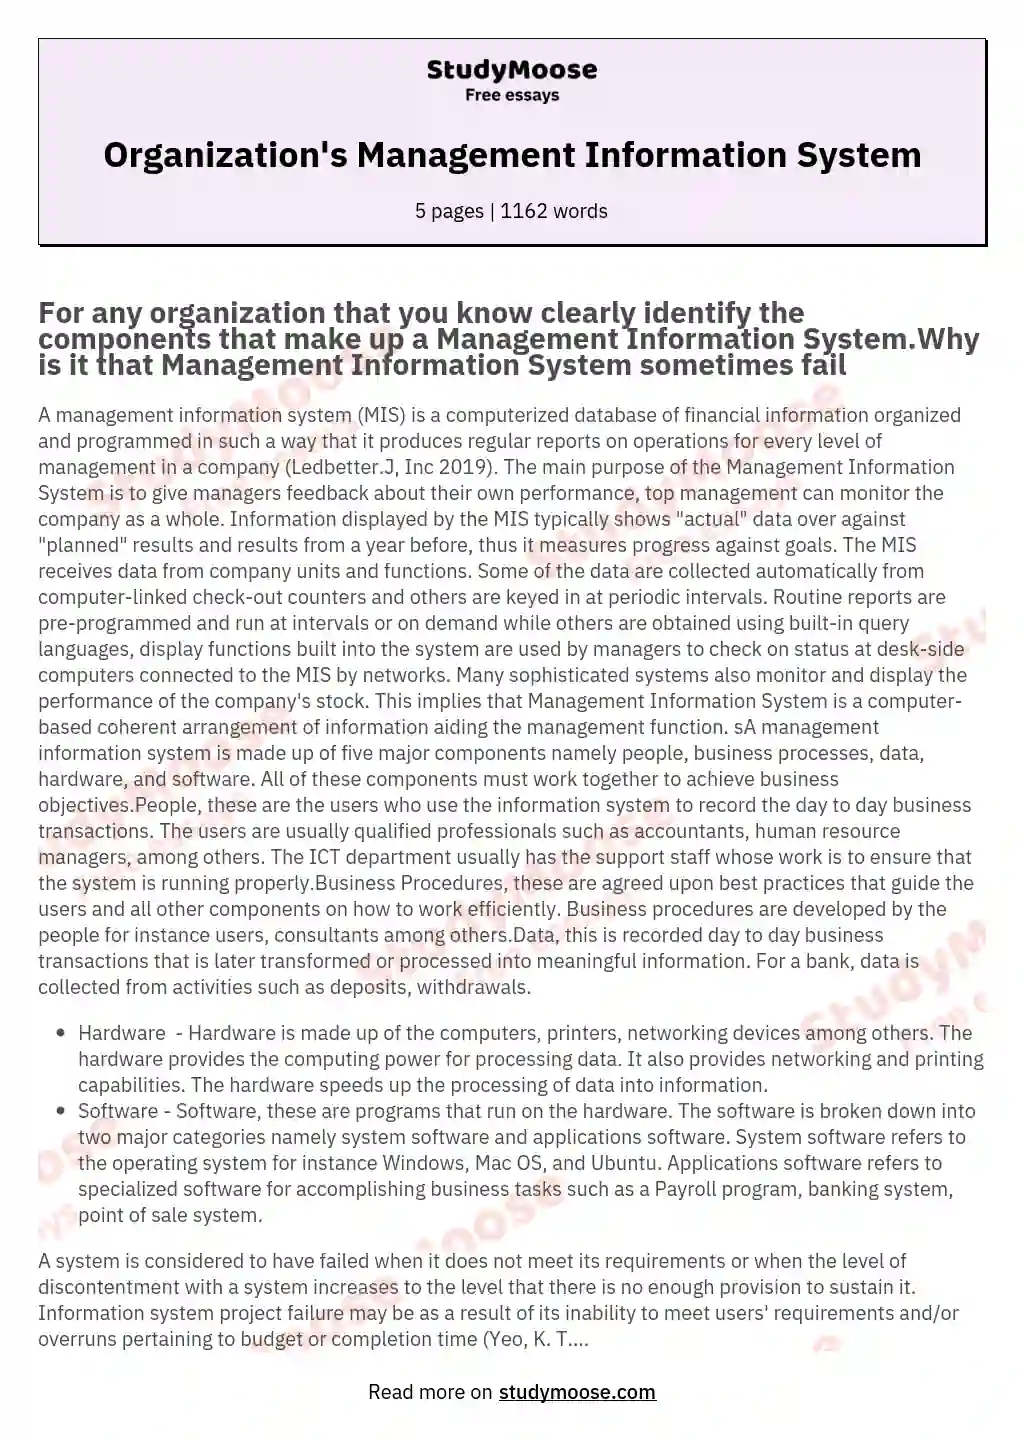 Organization's Management Information System essay